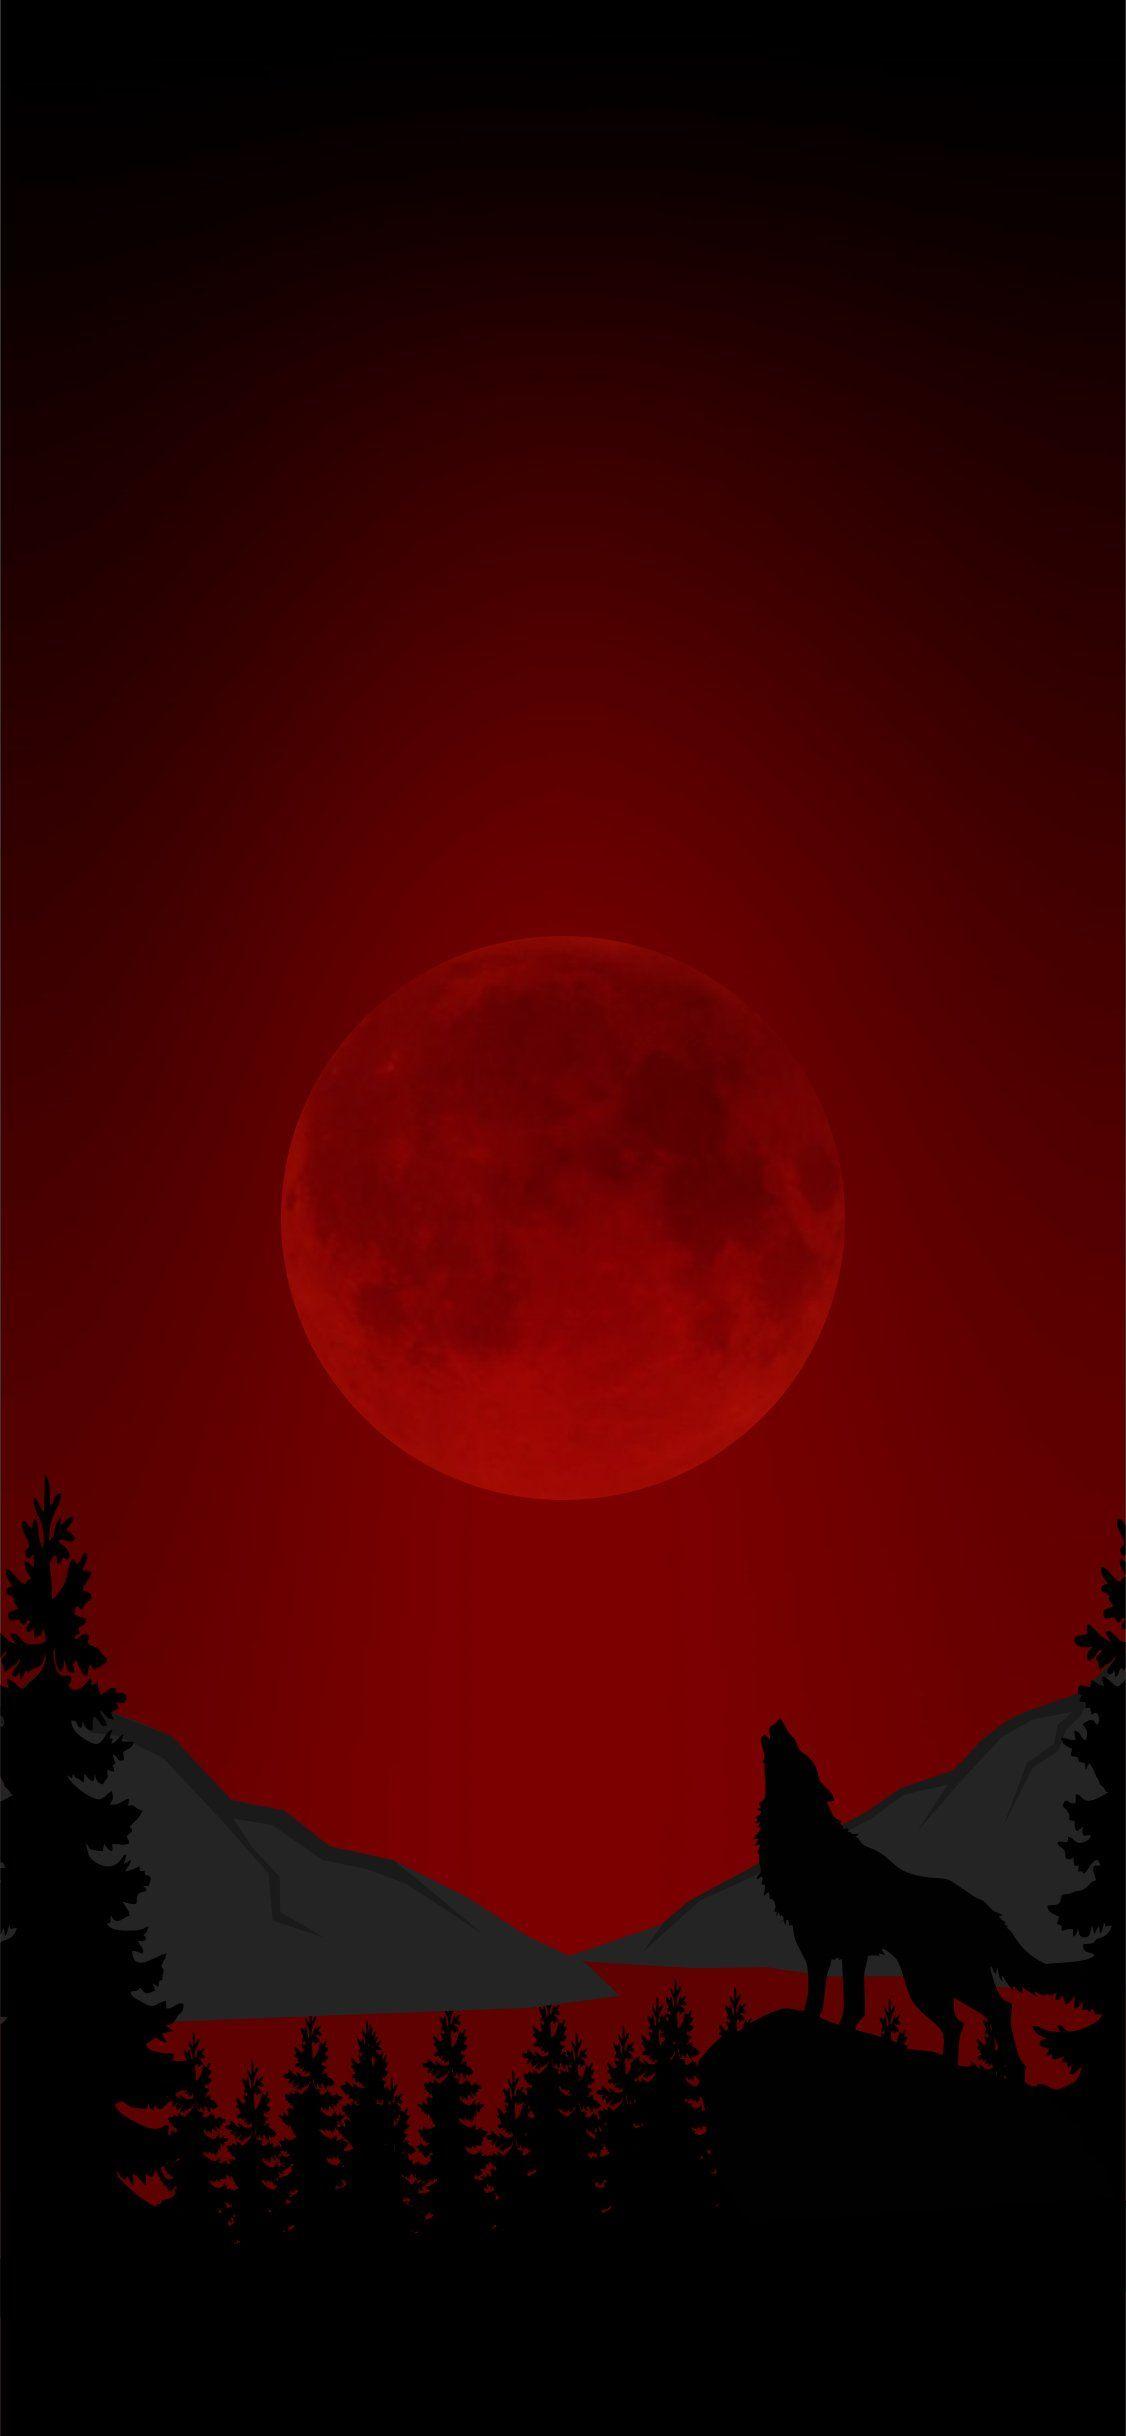 Blood moon. Smart Phone Wallpaper kphonewallpaperreddit